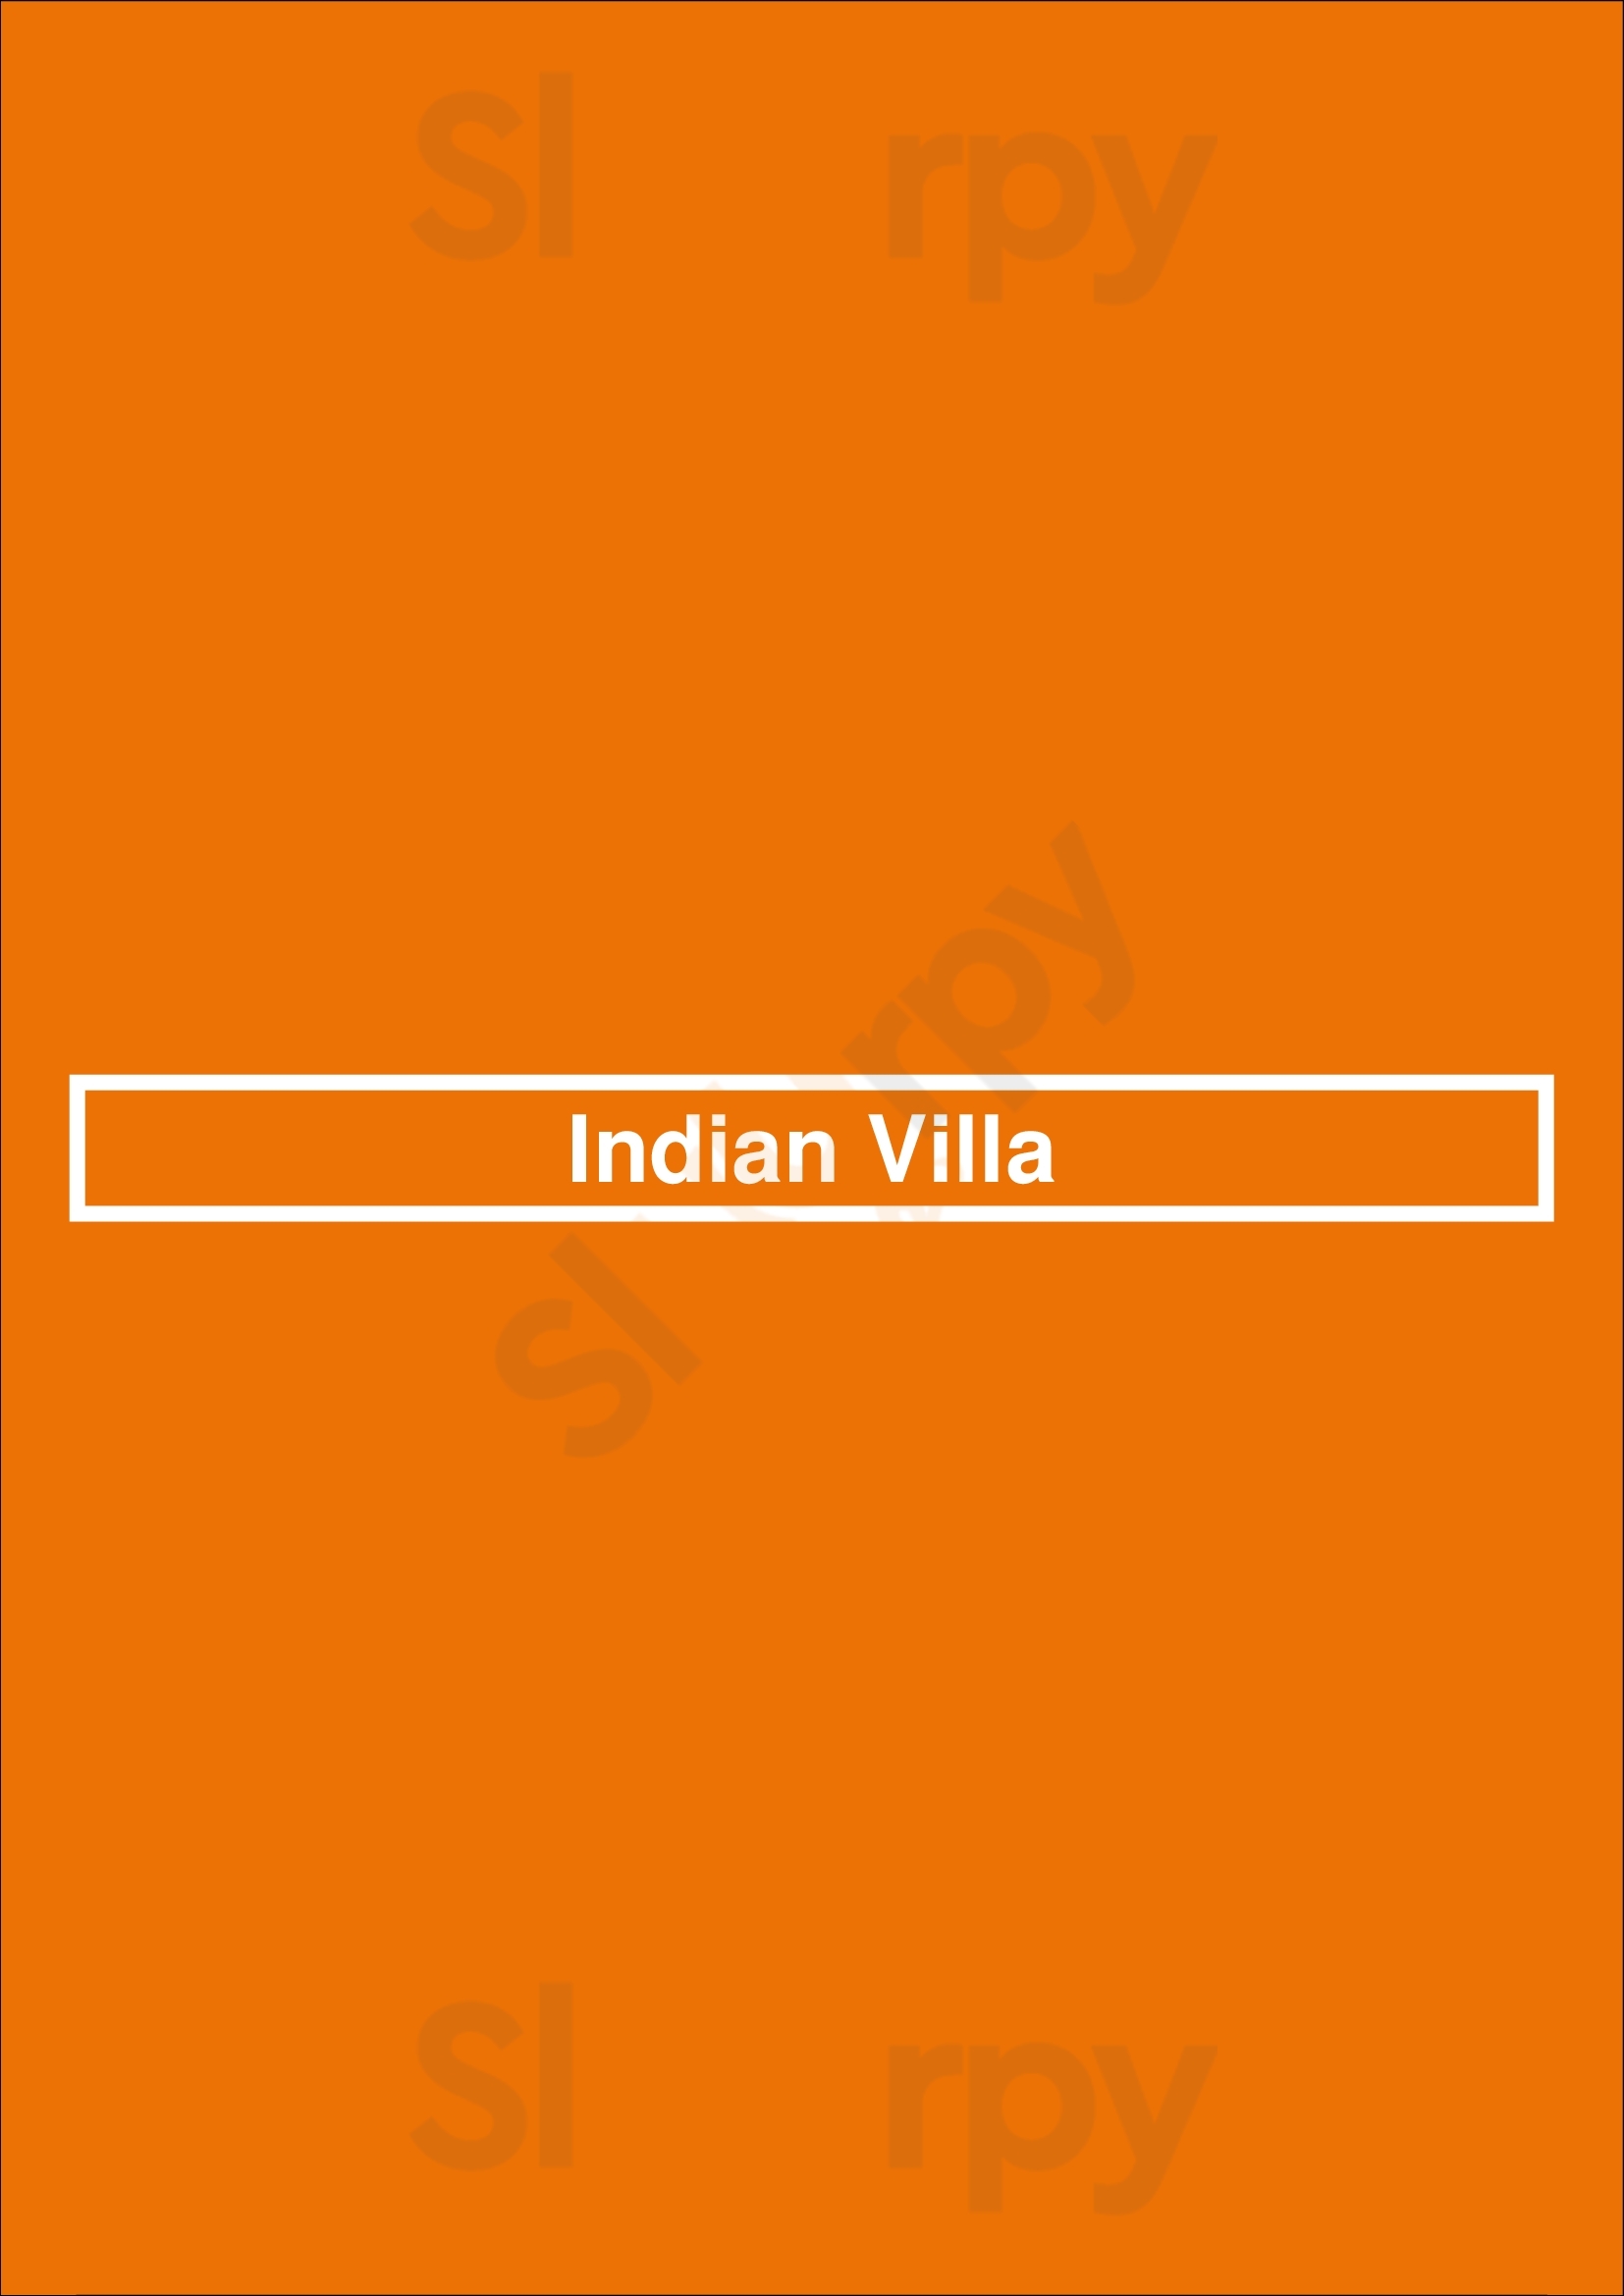 Indian Villa Paris Menu - 1